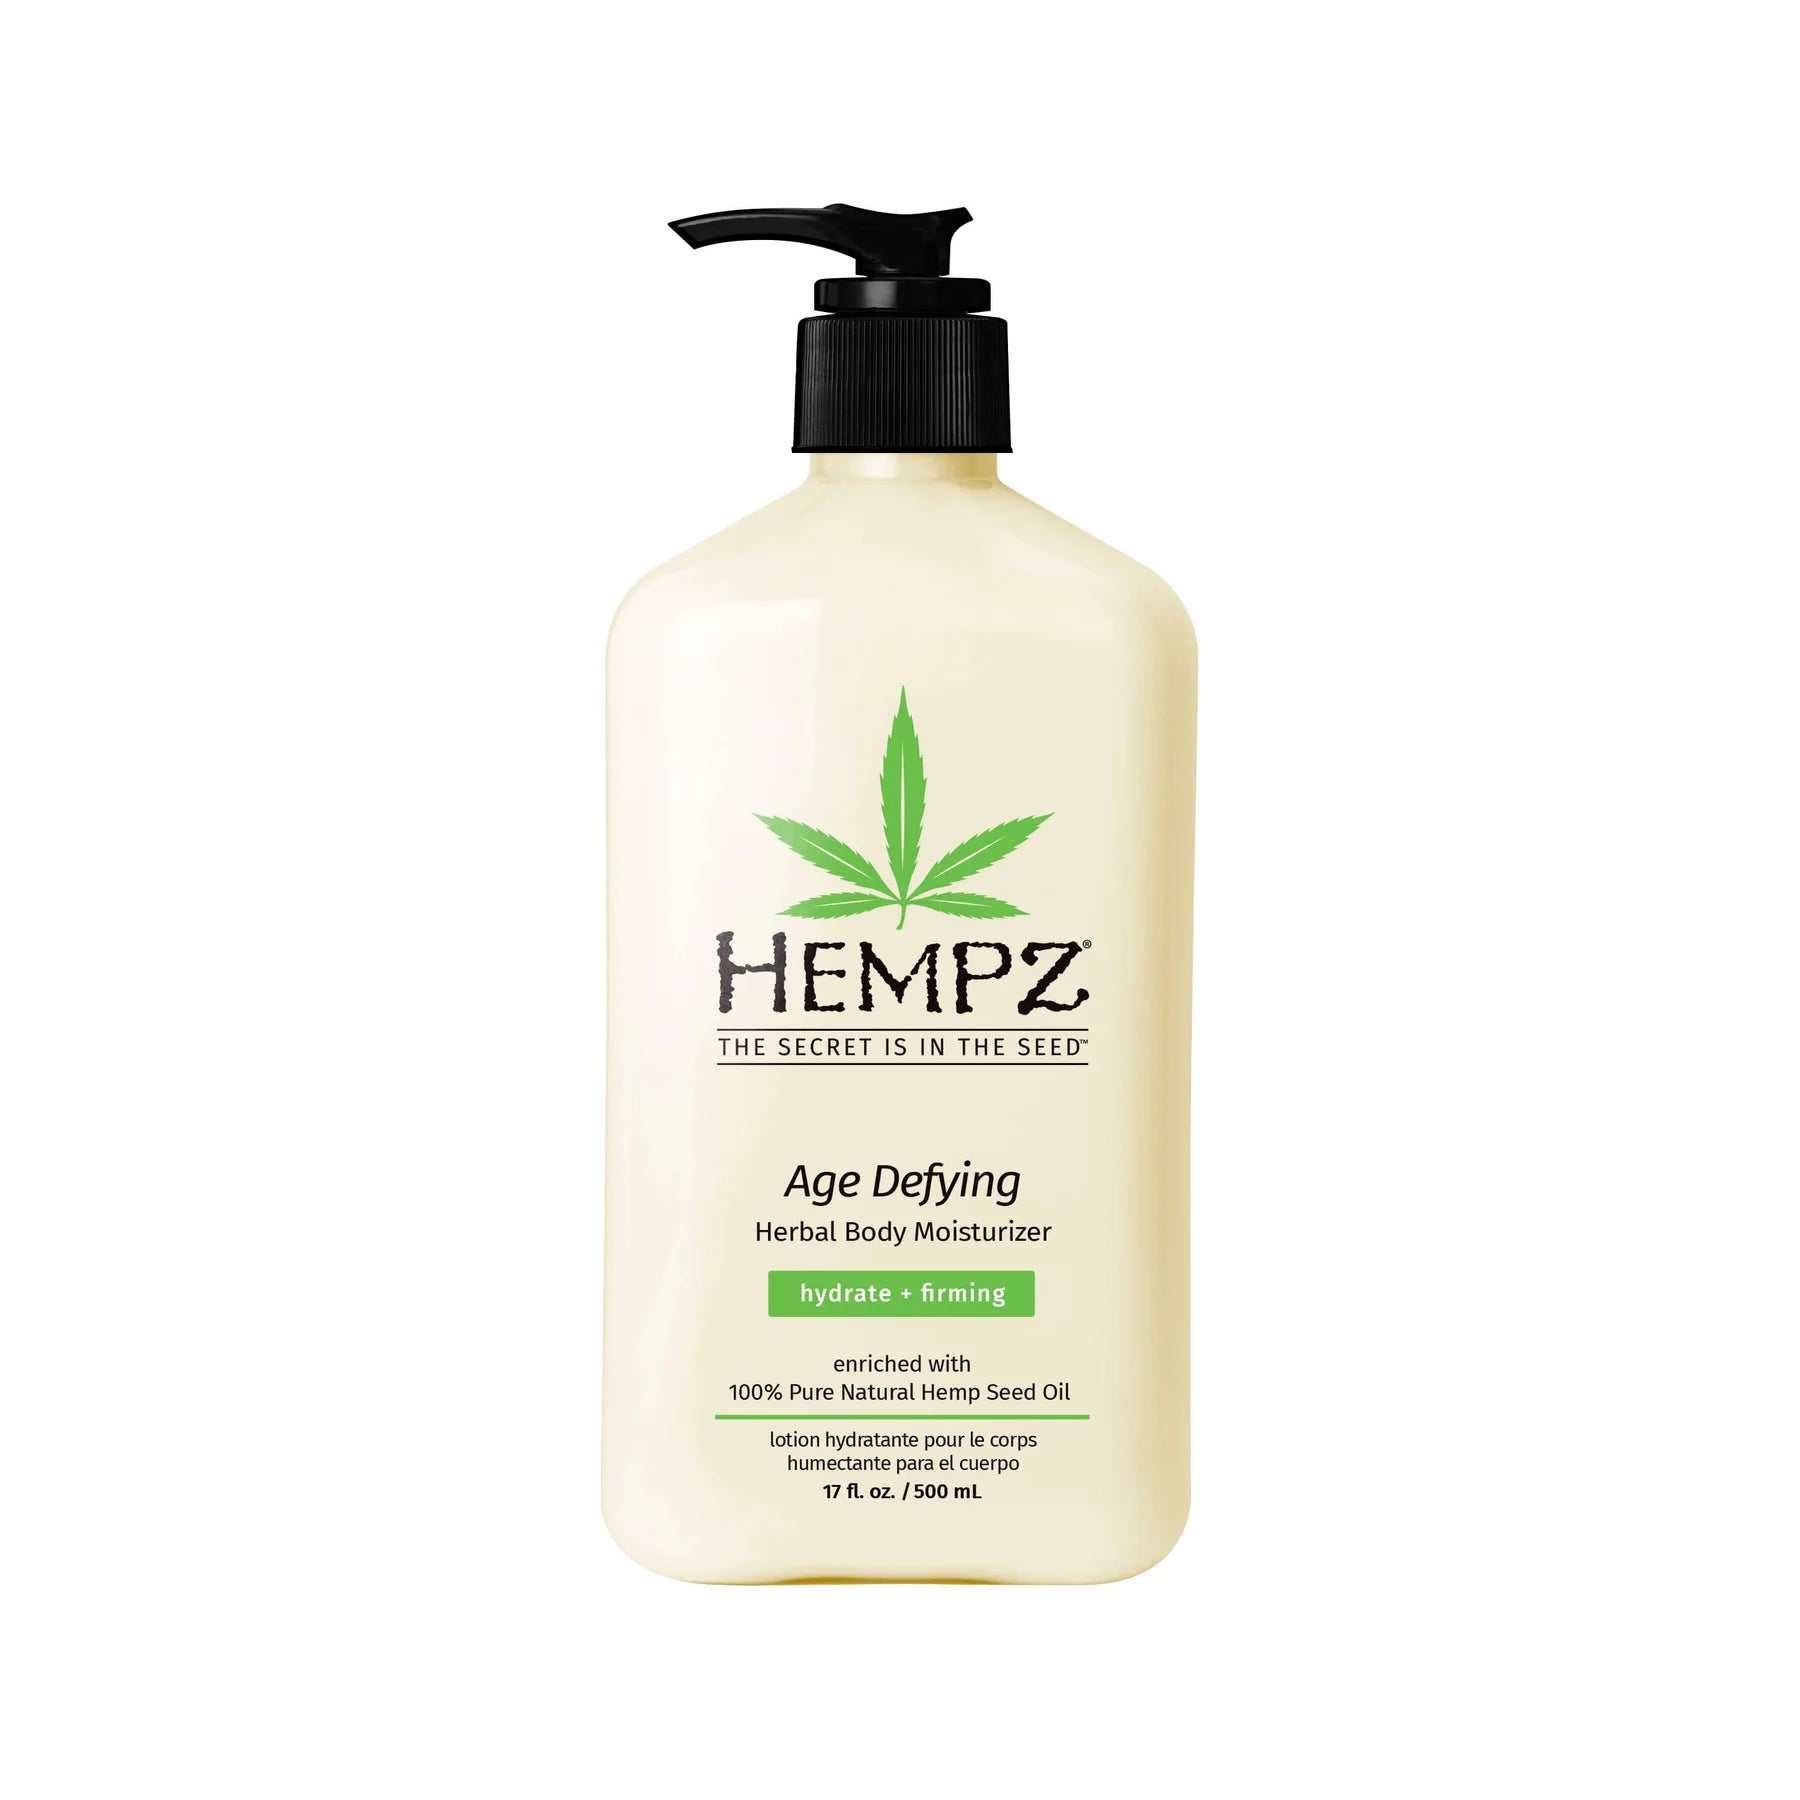 Hempz - Age Defying Herbal Body Moisturizer - Creata Beauty - Professional Beauty Products